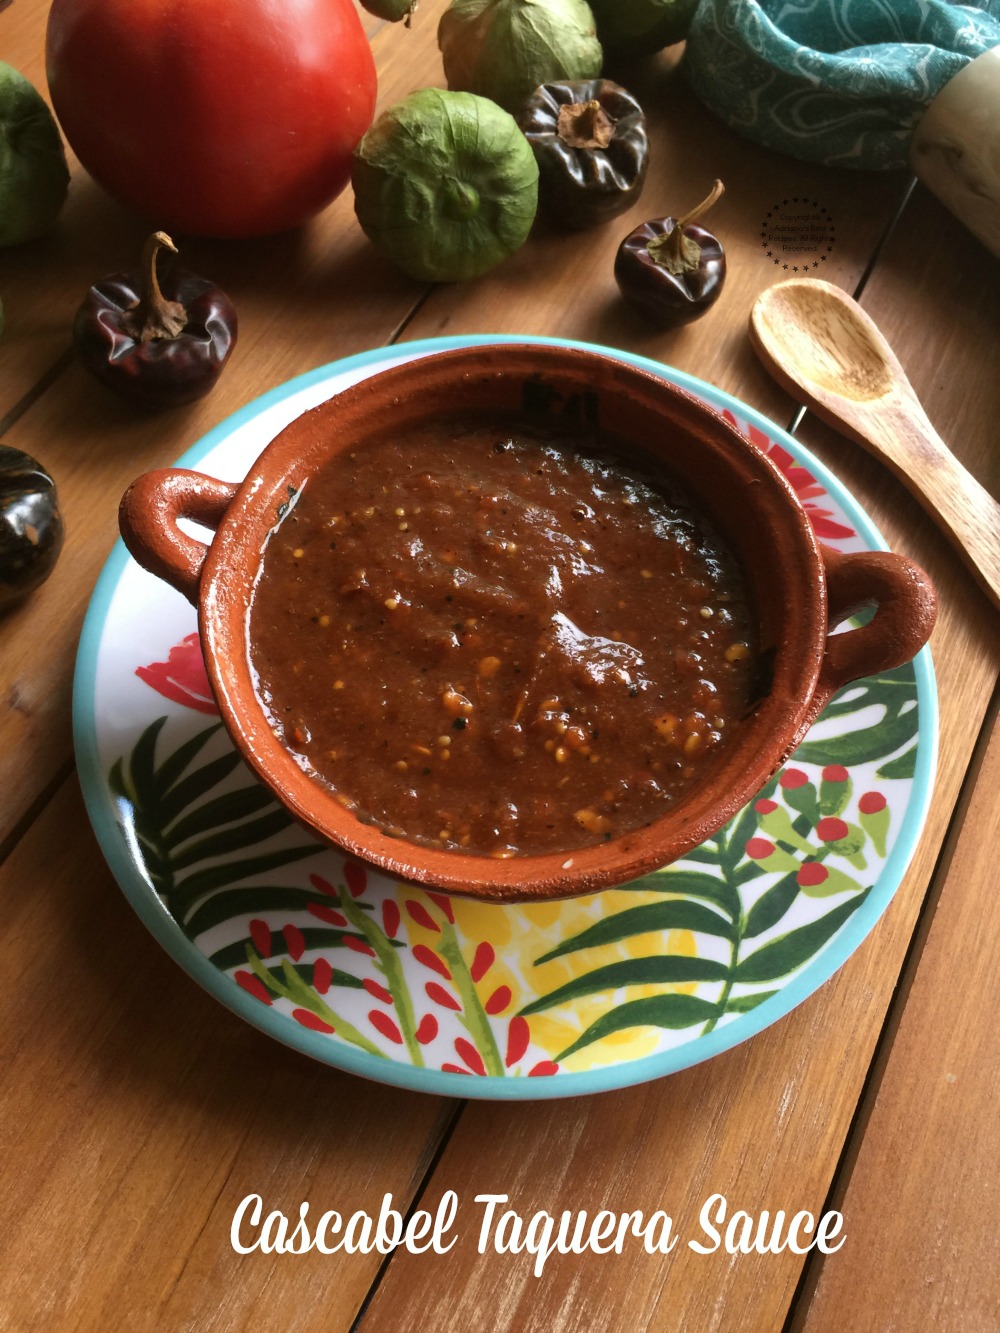 La salsa taquera de chile cascabel está hecha con chiles cascabel secos, tomatillos, jitomate, ajo, comino y sal al gusto